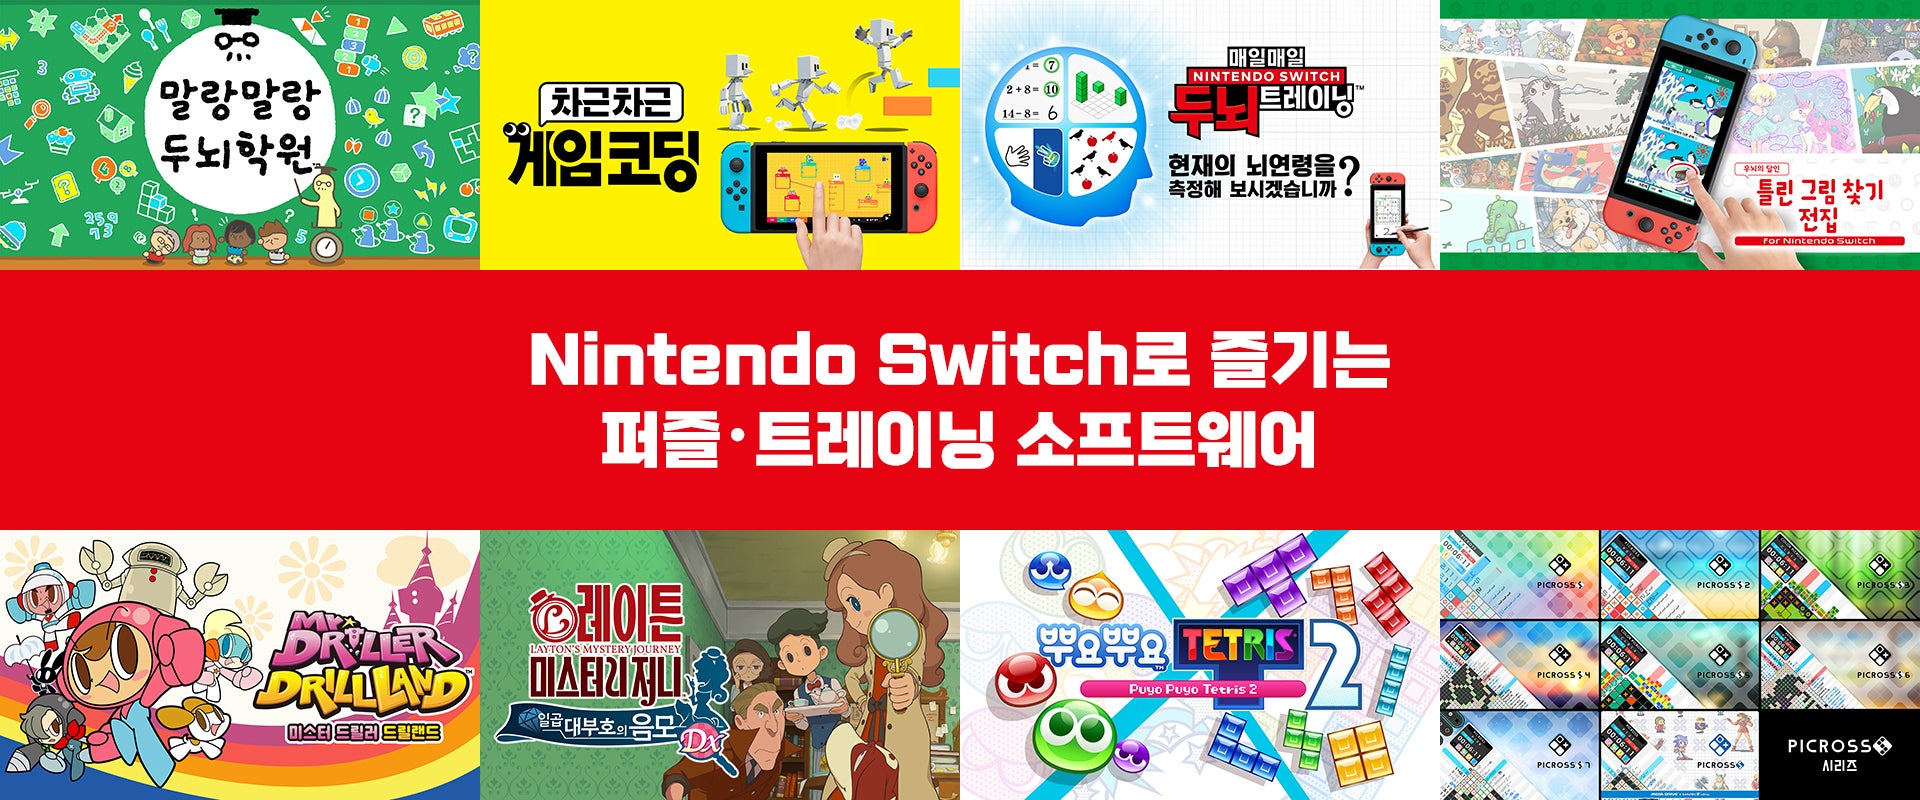 Nintendo Switch로 즐기는 퍼즐・트레이닝 소프트웨어